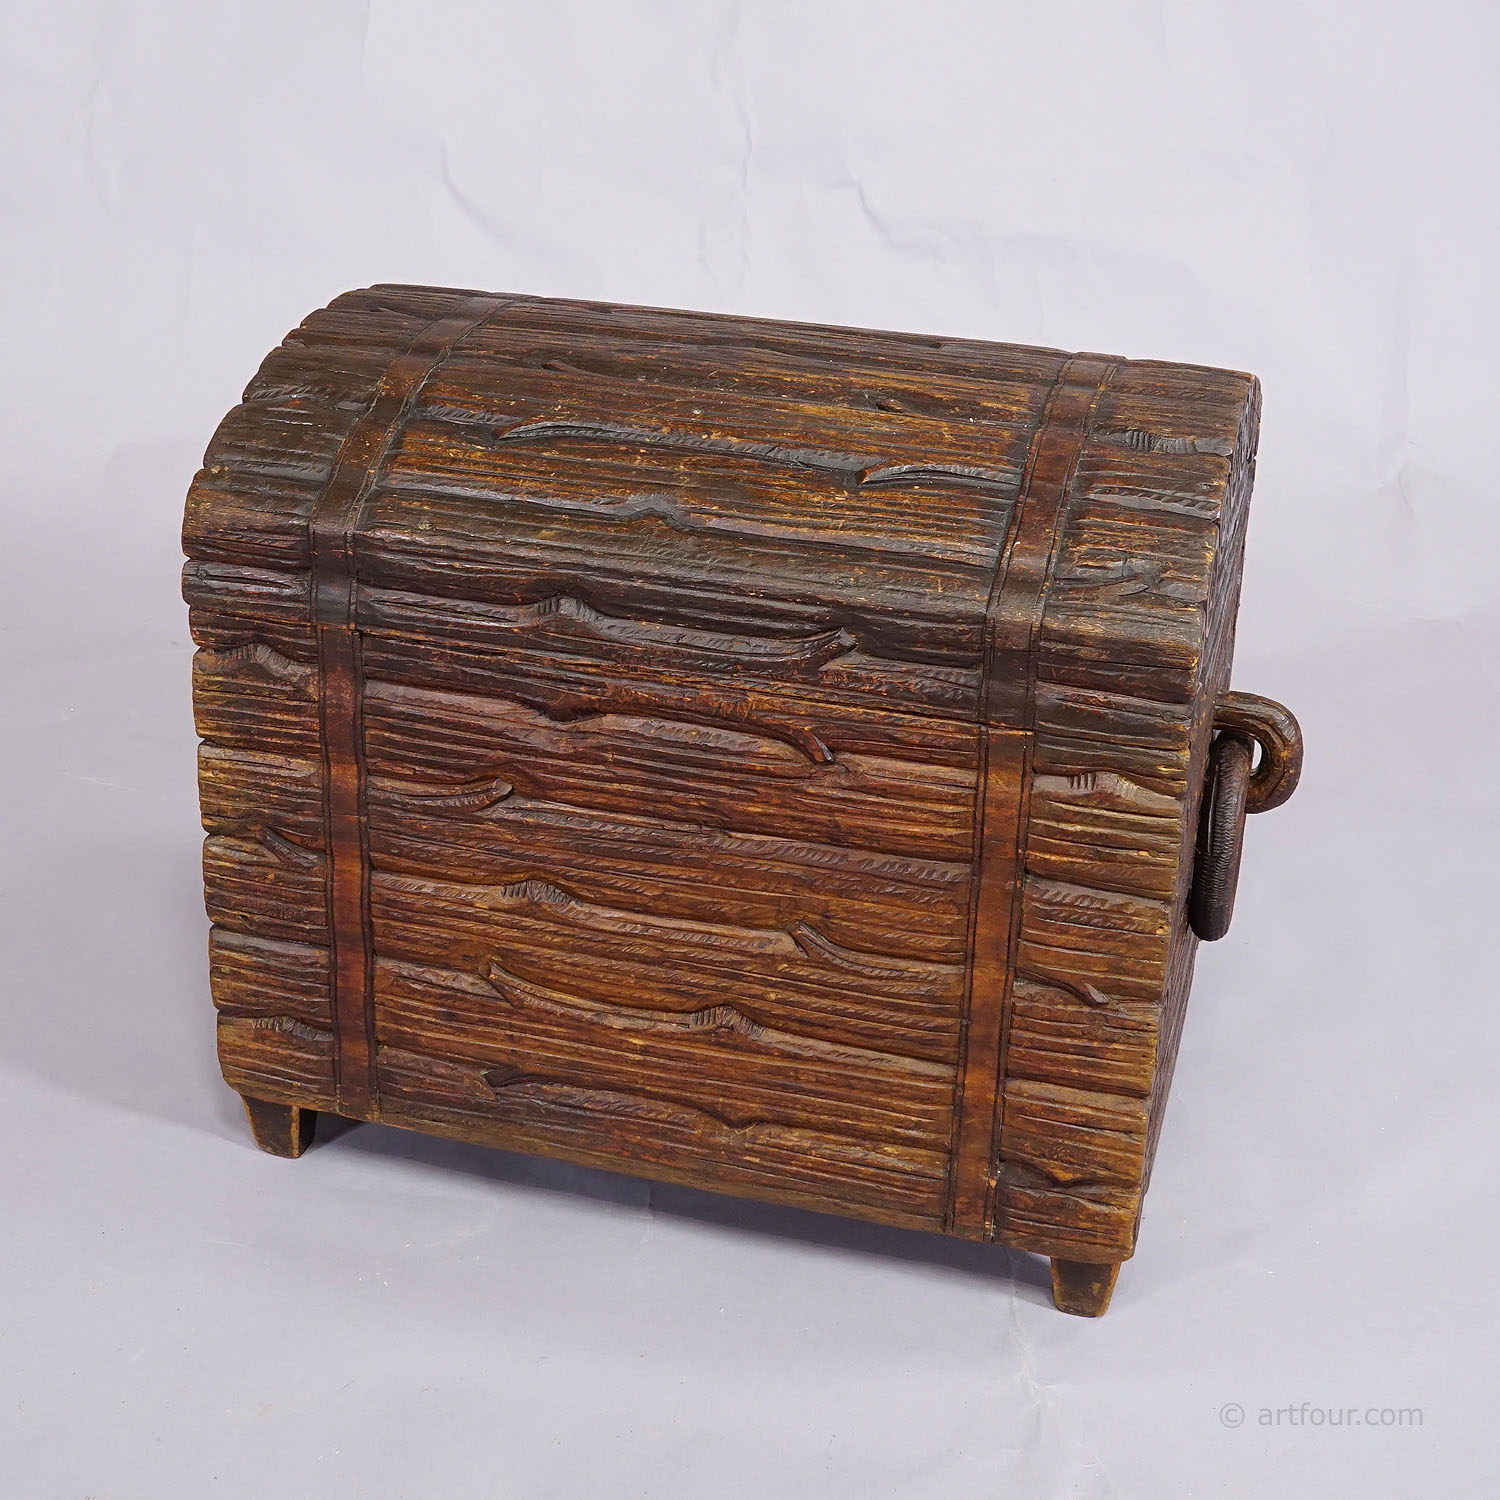 Wooden Carved Black Forest Log Box Modelled as Piled Stack of Logs